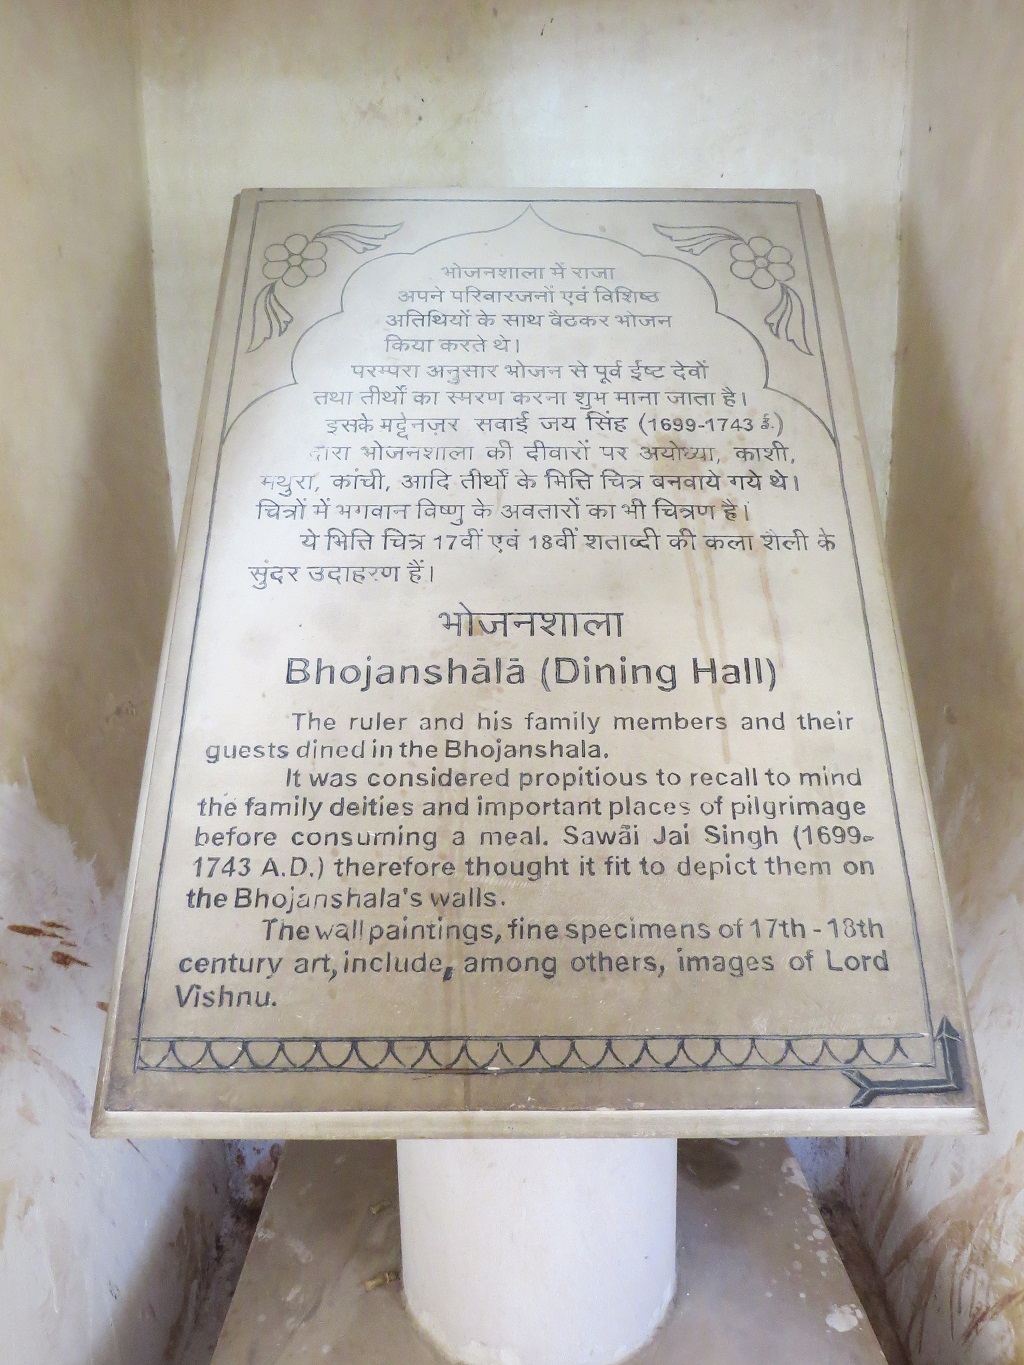 About: Bhojanshala (Dining Hall)